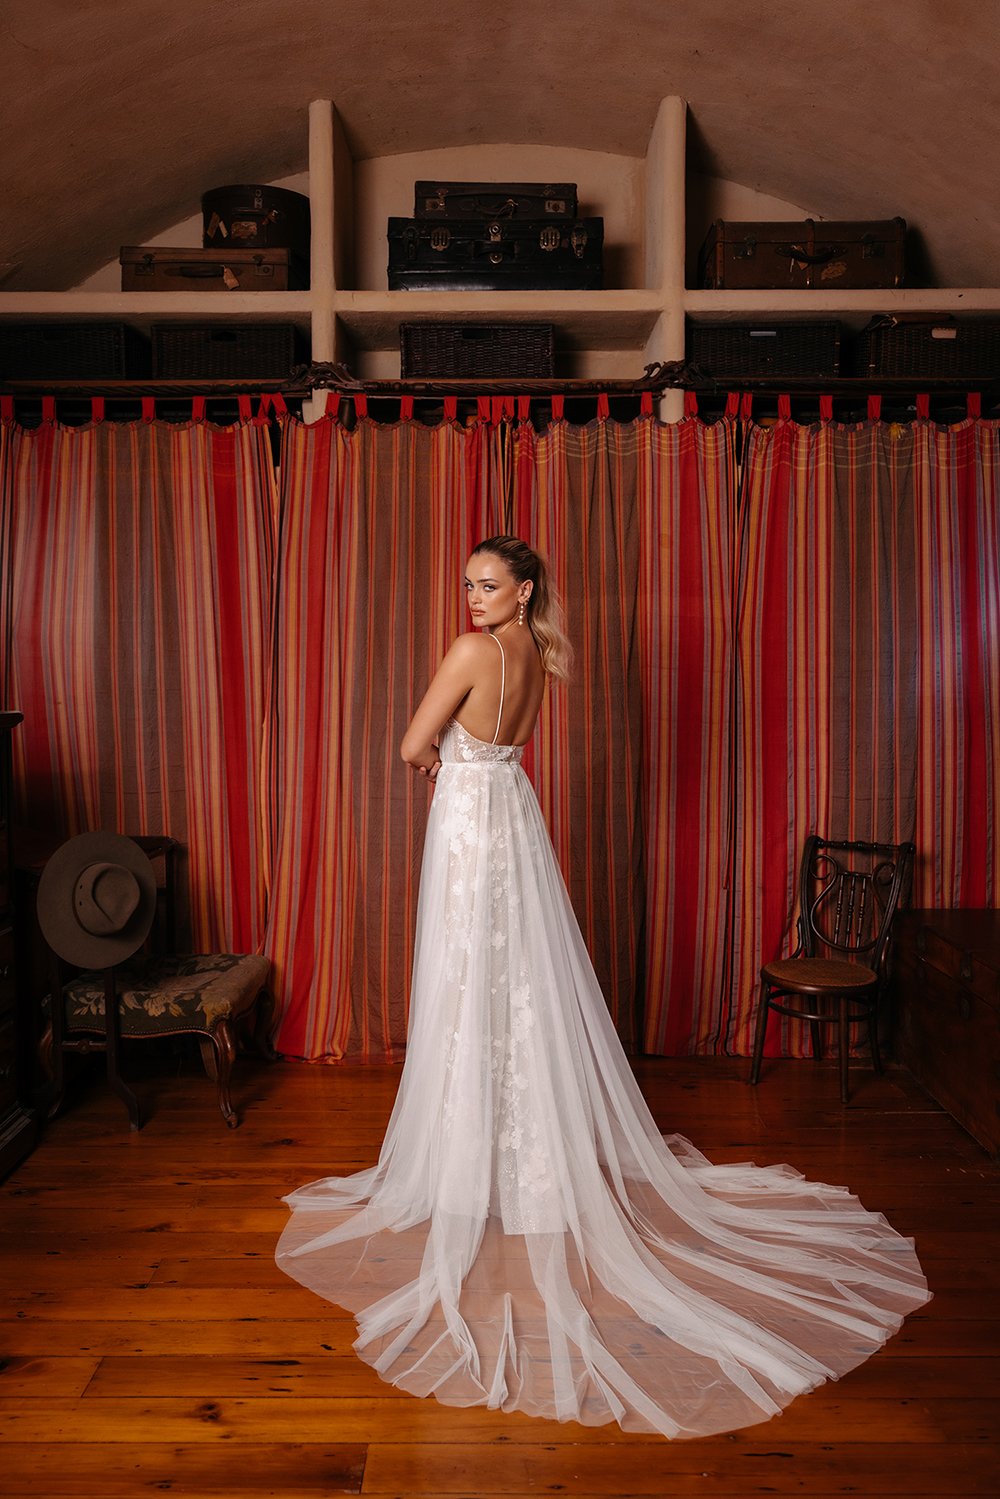 blanc-de-blanc-bridal-boutique-pittsburgh-dress-wedding-gown-cherish.jpg